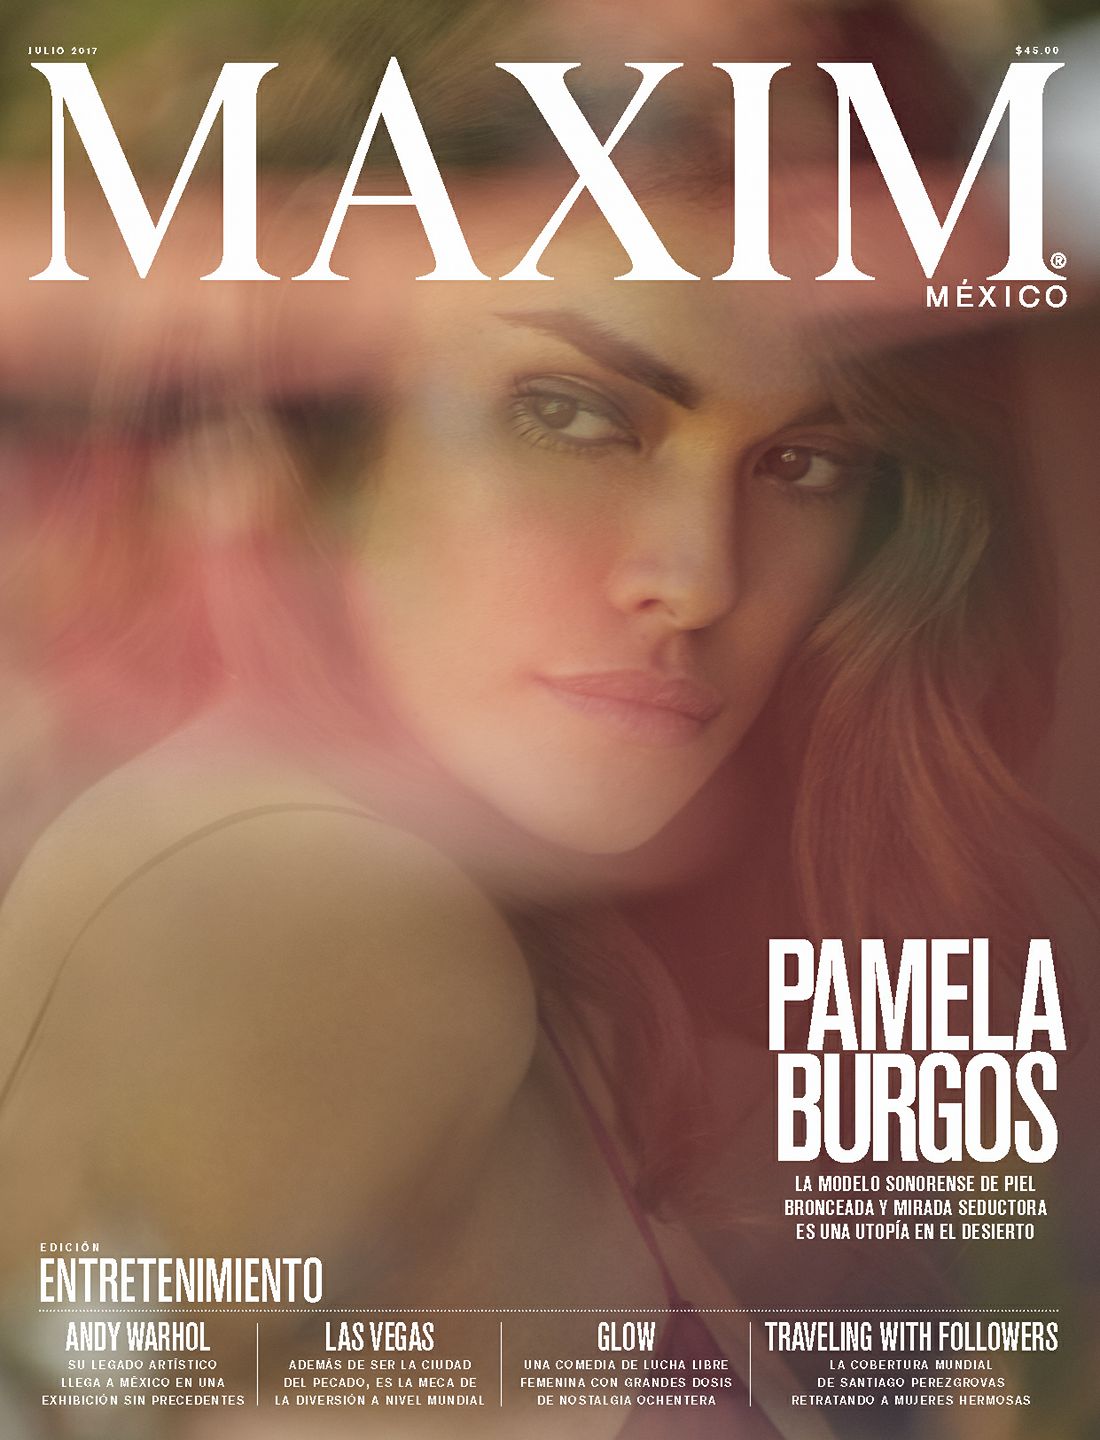 Pamela Burgos for Maxim Mexico July 2017